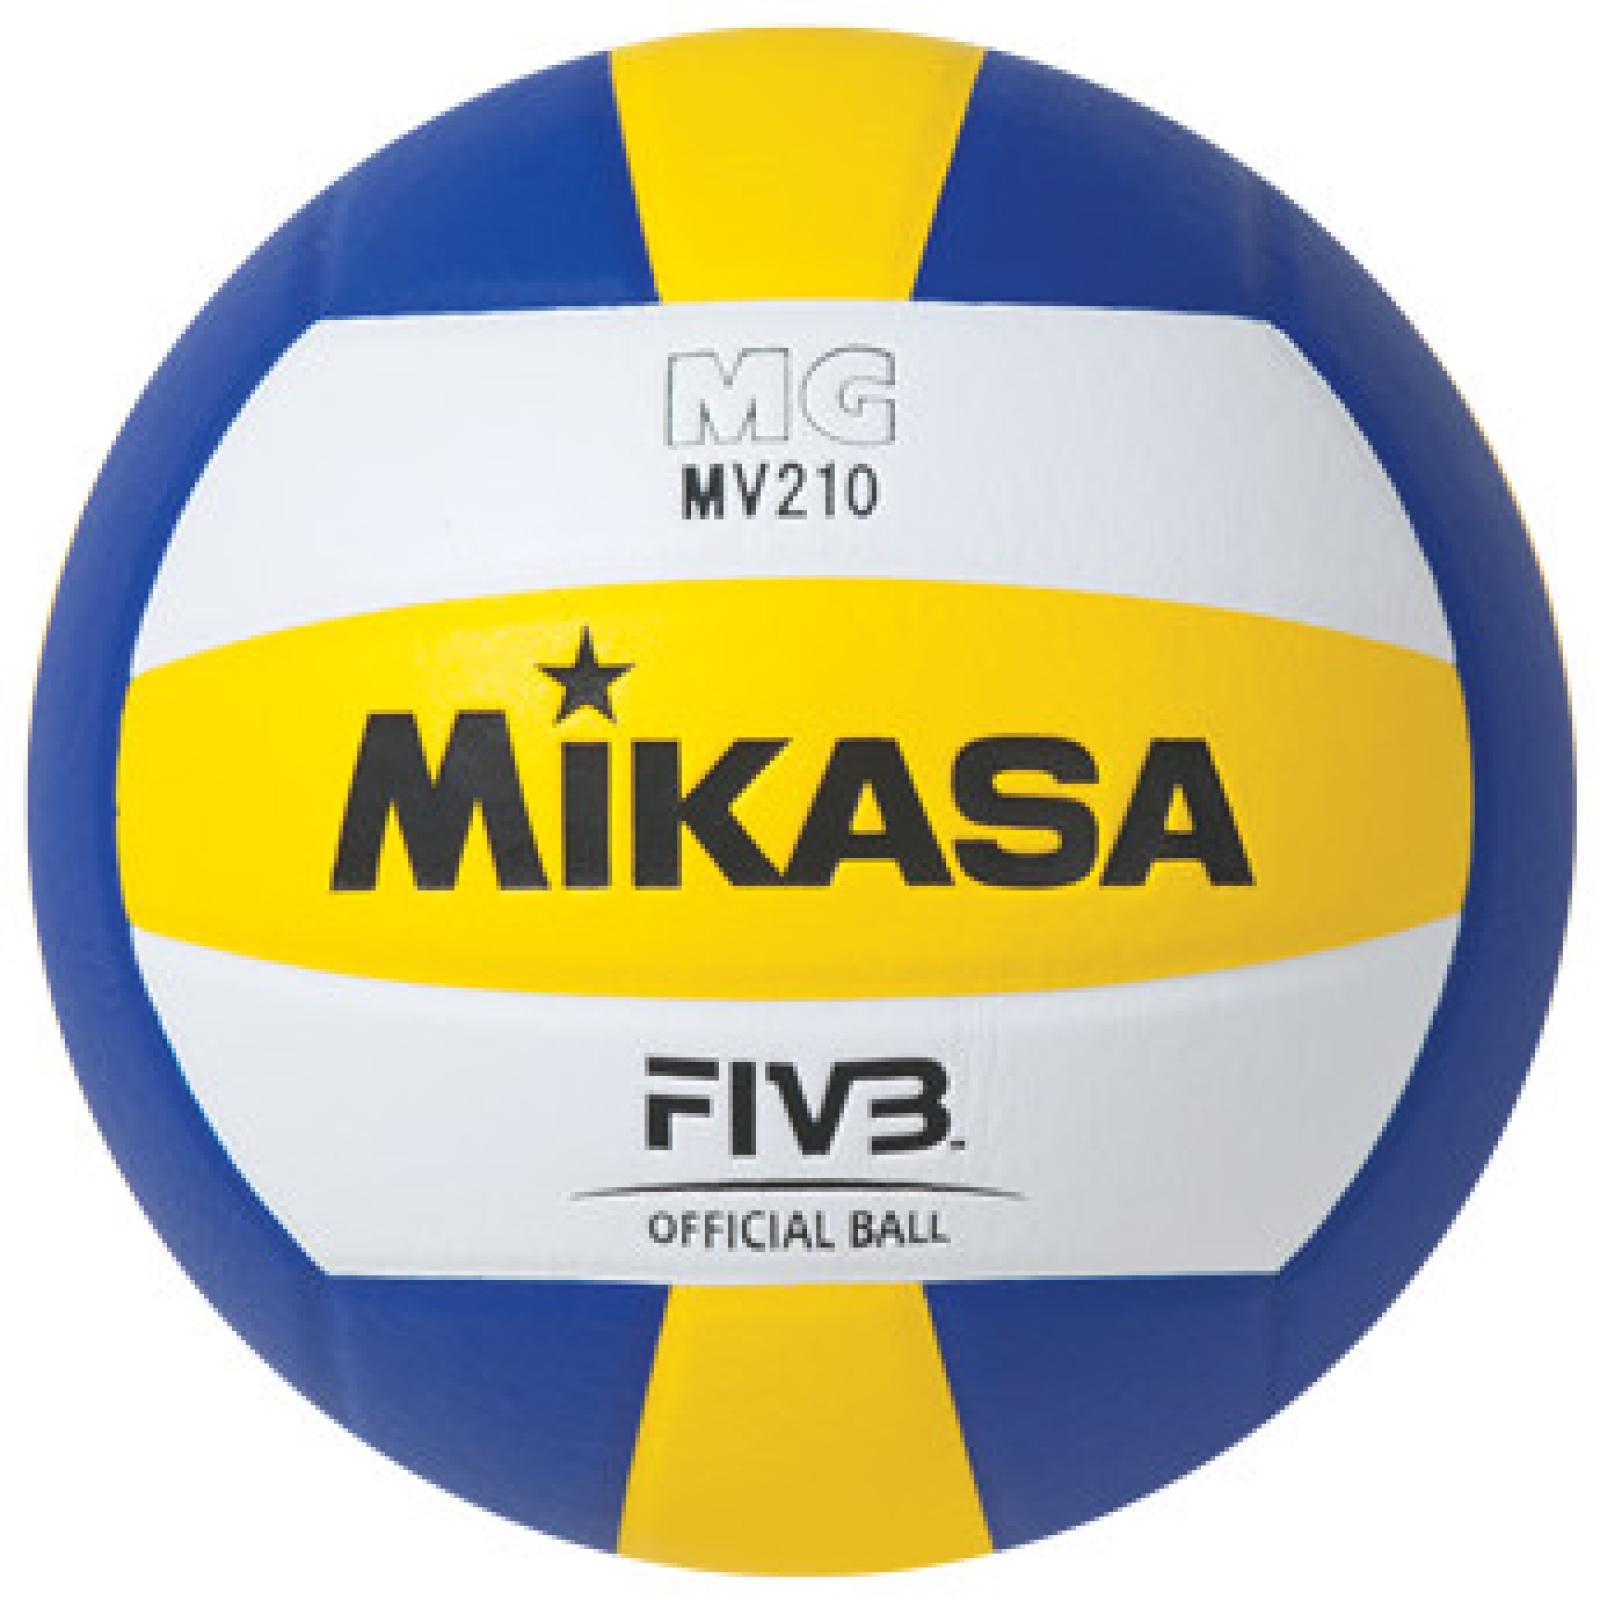 Mikasa Mva200 No5 International Official Ball Test Fivb